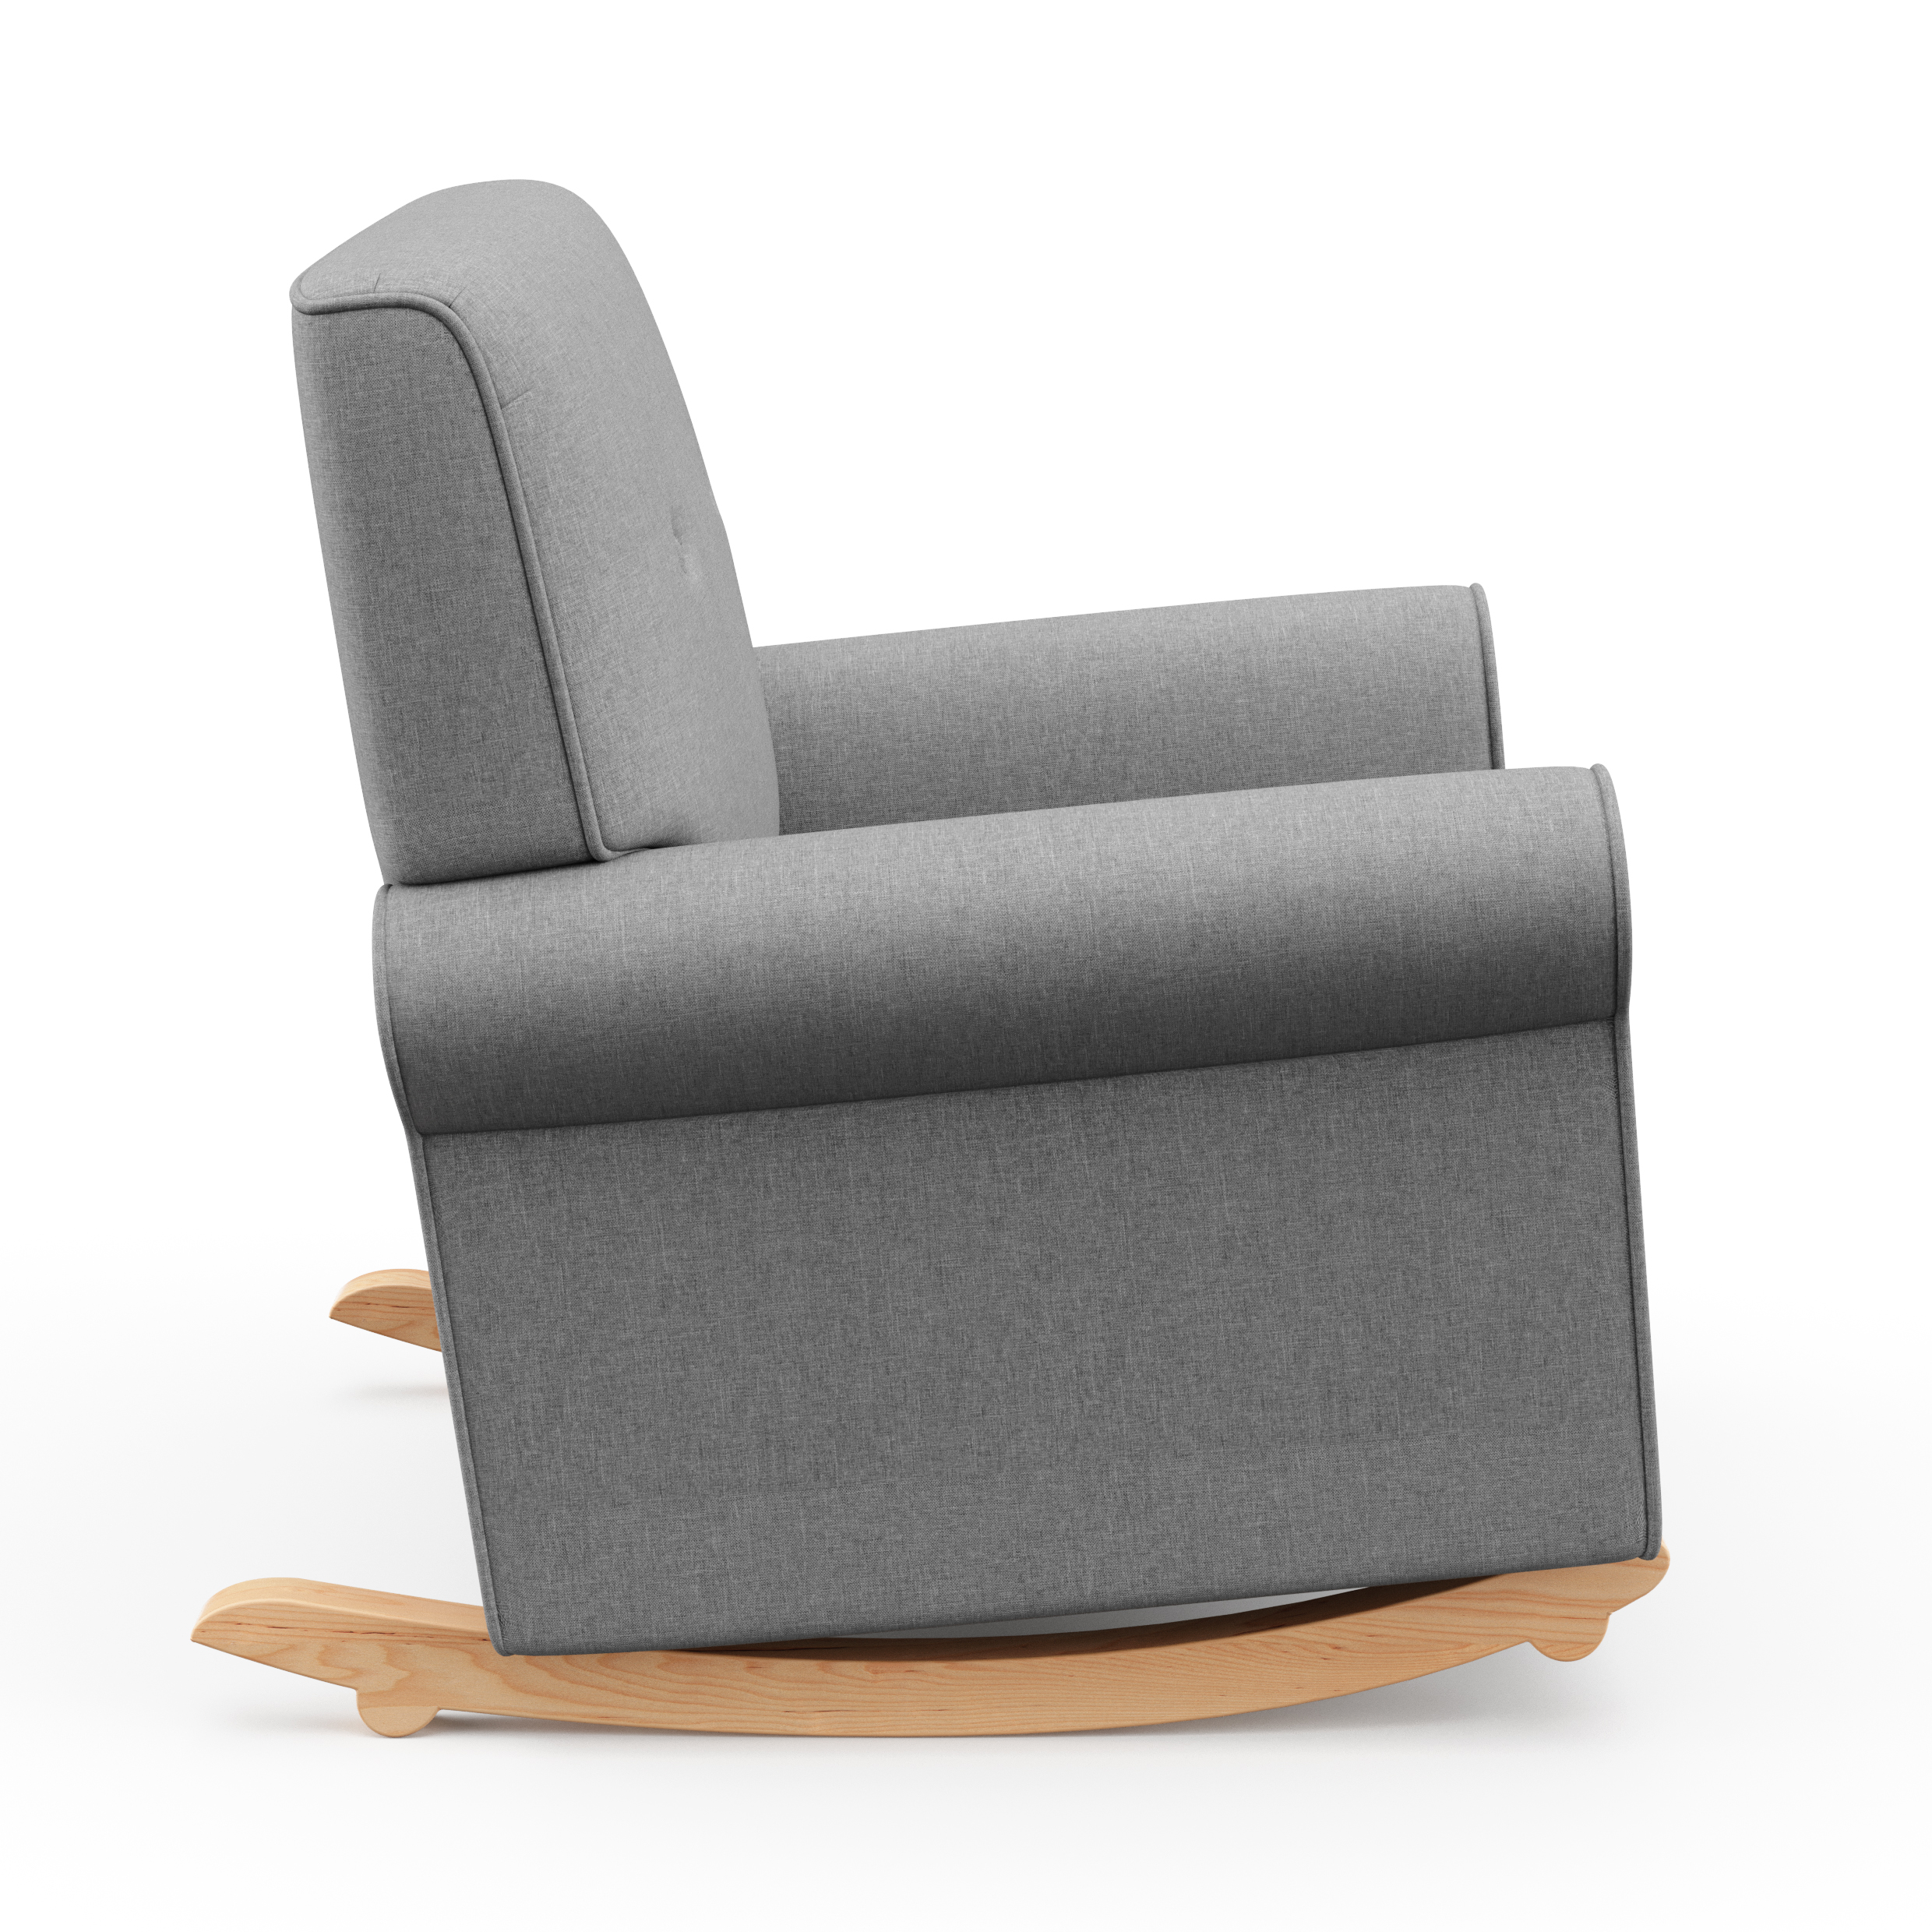 Graco Harper Poly-Linen Indoor Nursery Rocking Chair, Horizon Gray - image 3 of 6